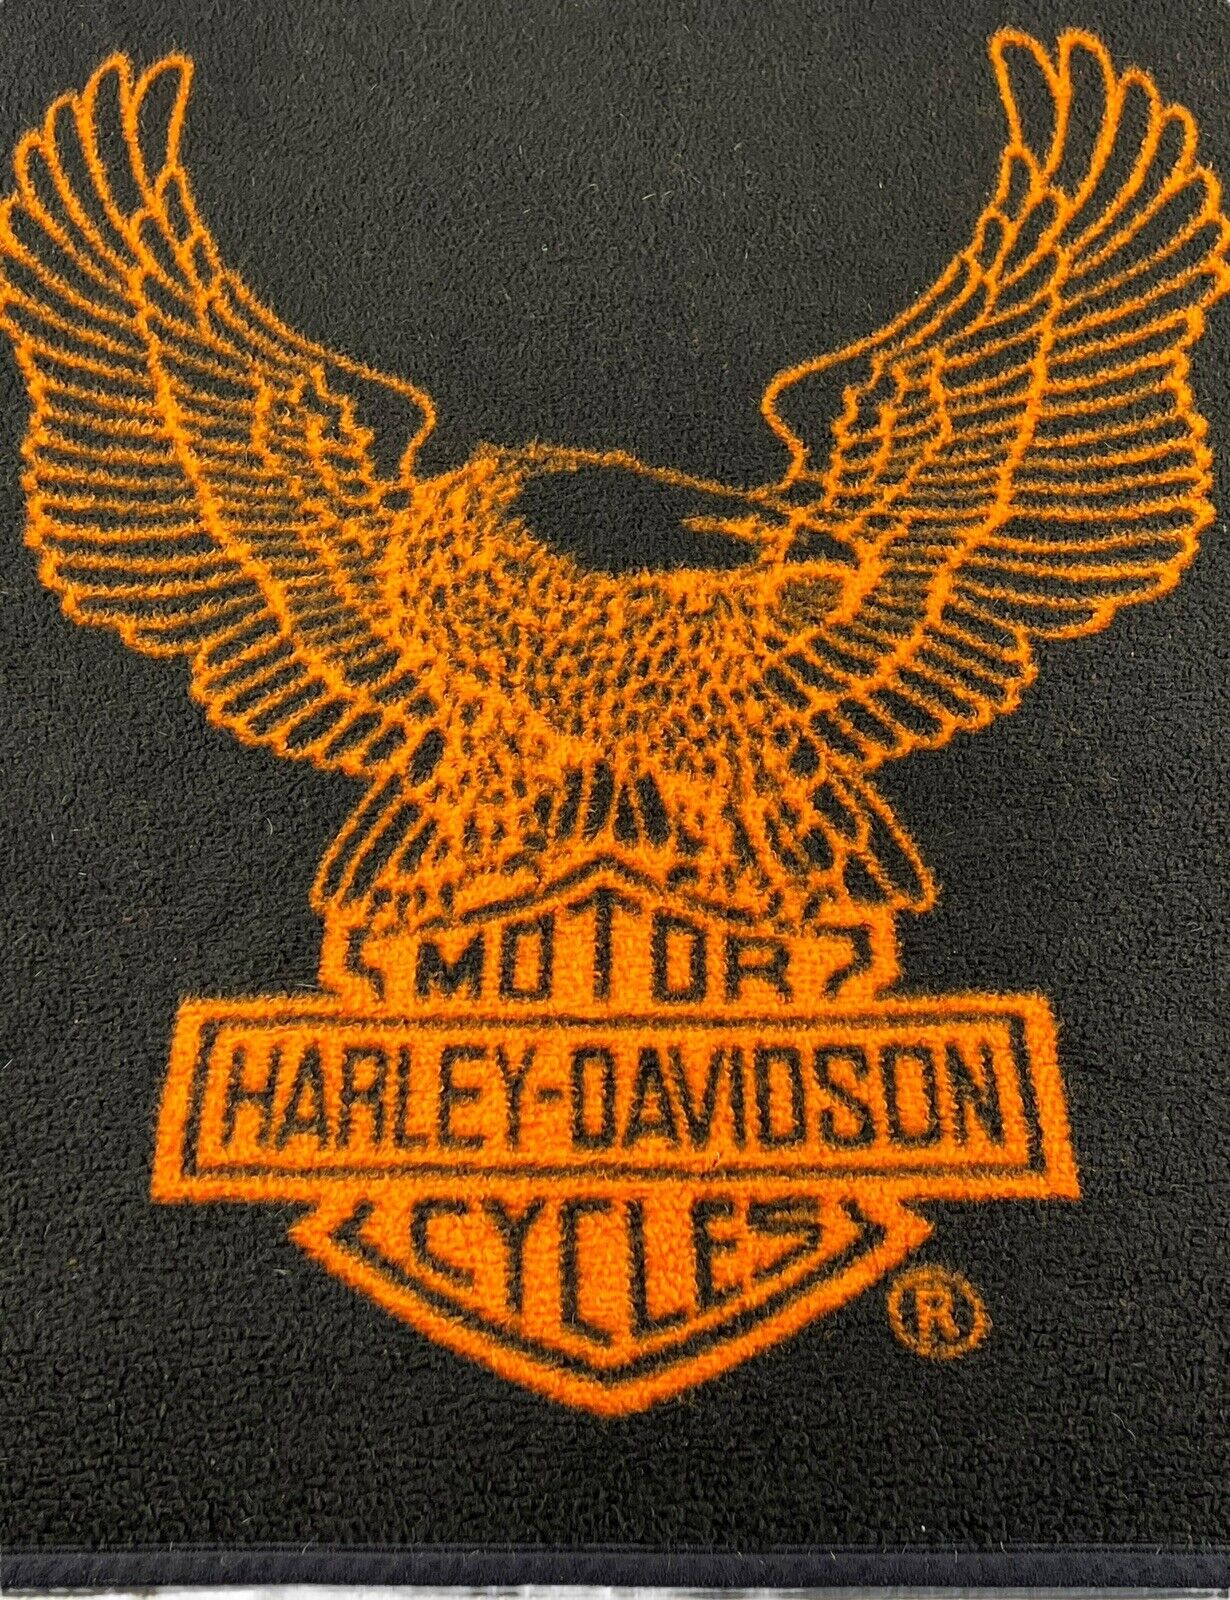 Vintage Harley Davidson Biederlack Blanket Throw 56”x 47” 2002 Black Orange USA